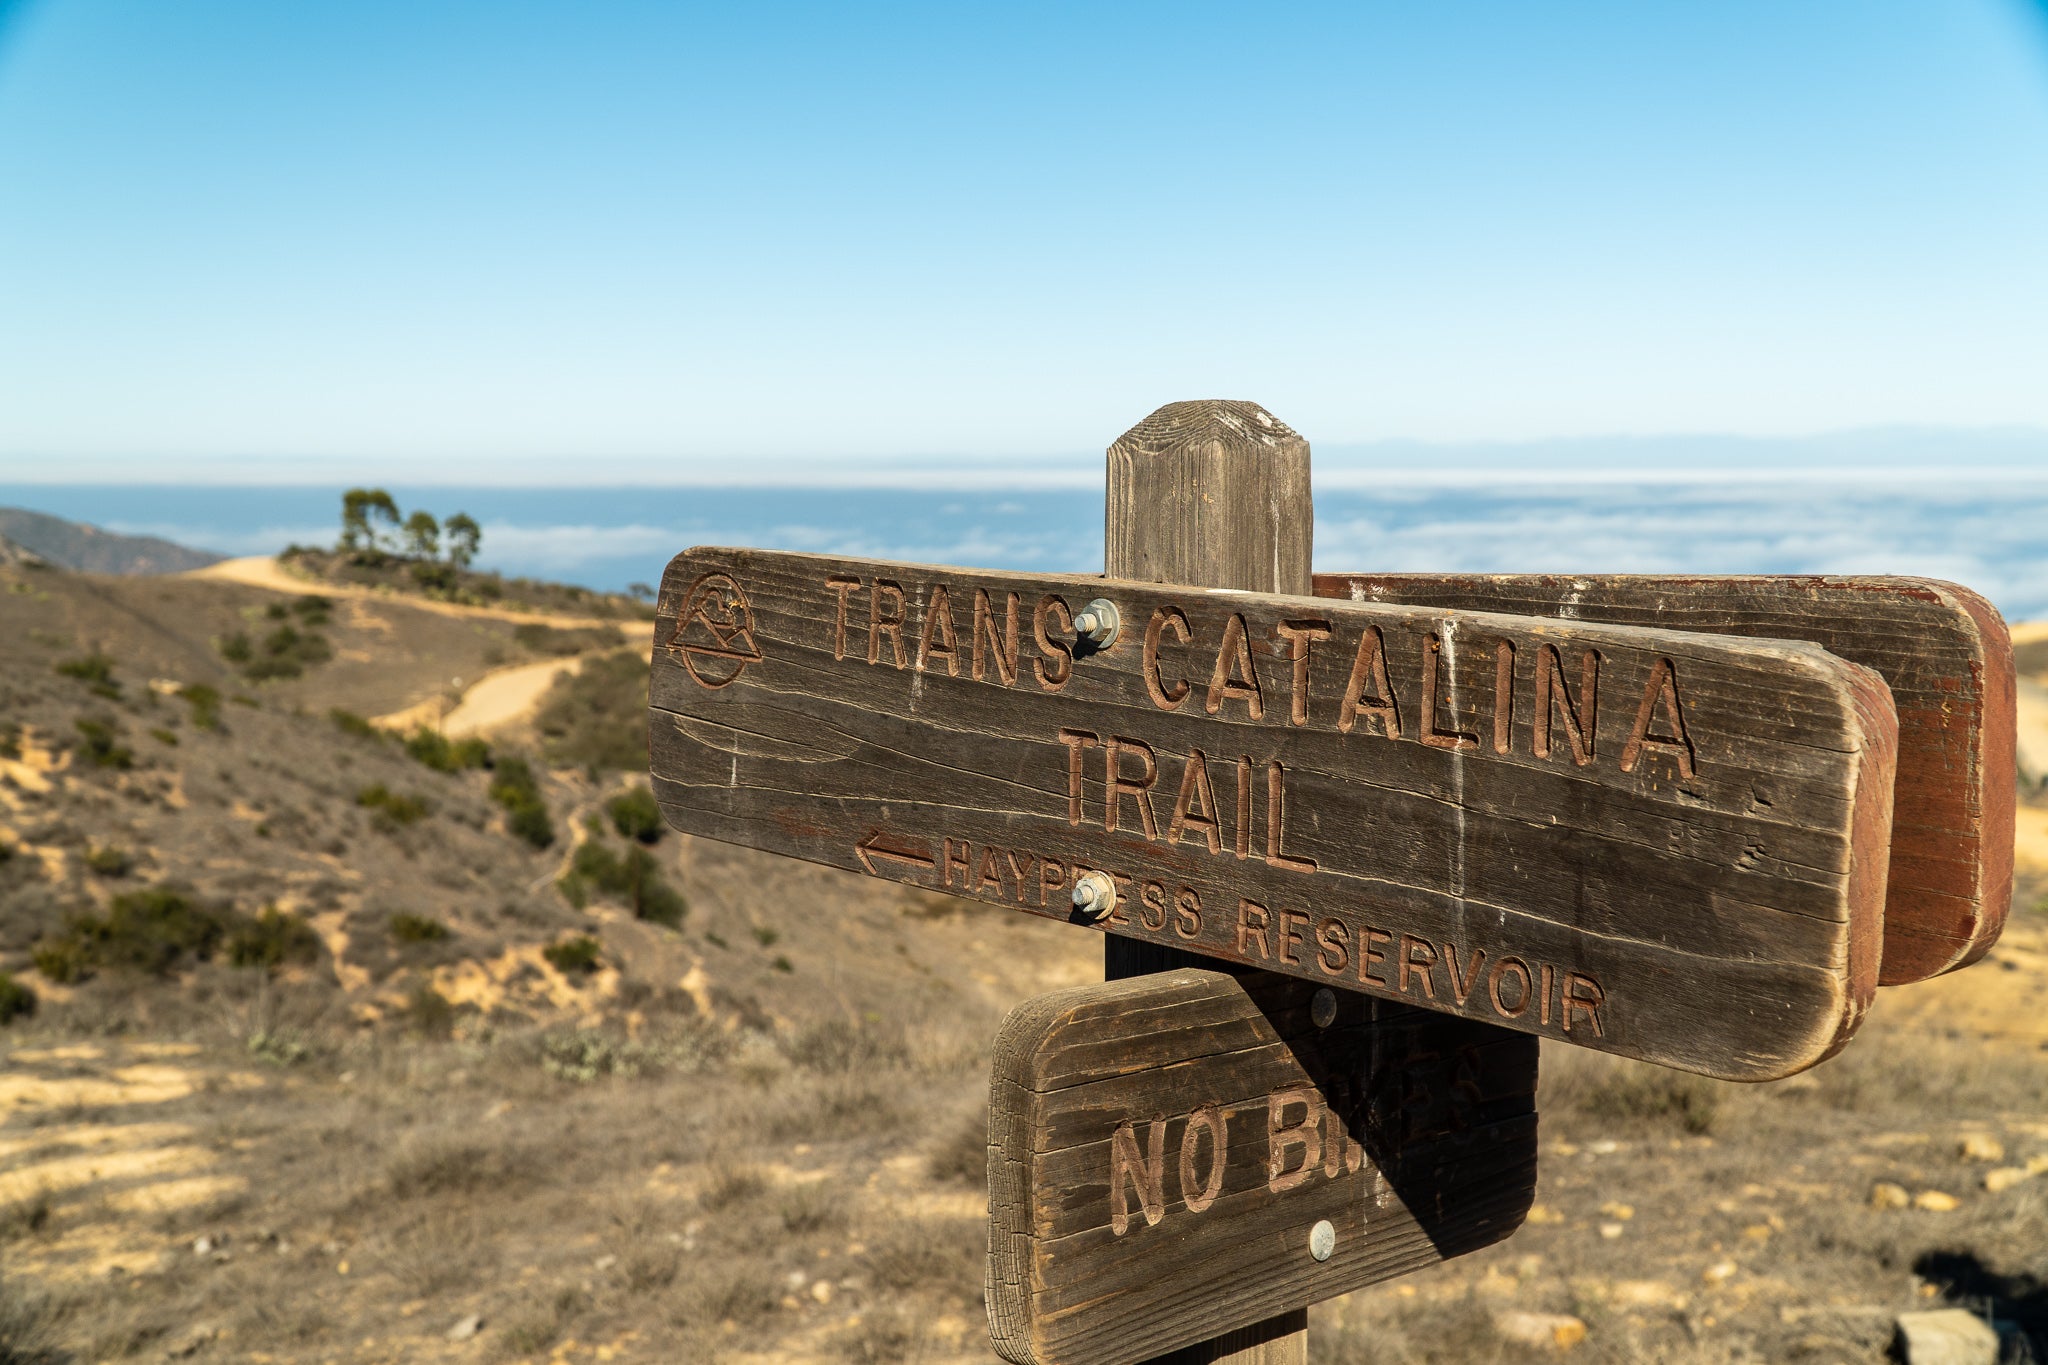 Trans Catalina Trail - Pier to Pier by Jason Huckeba